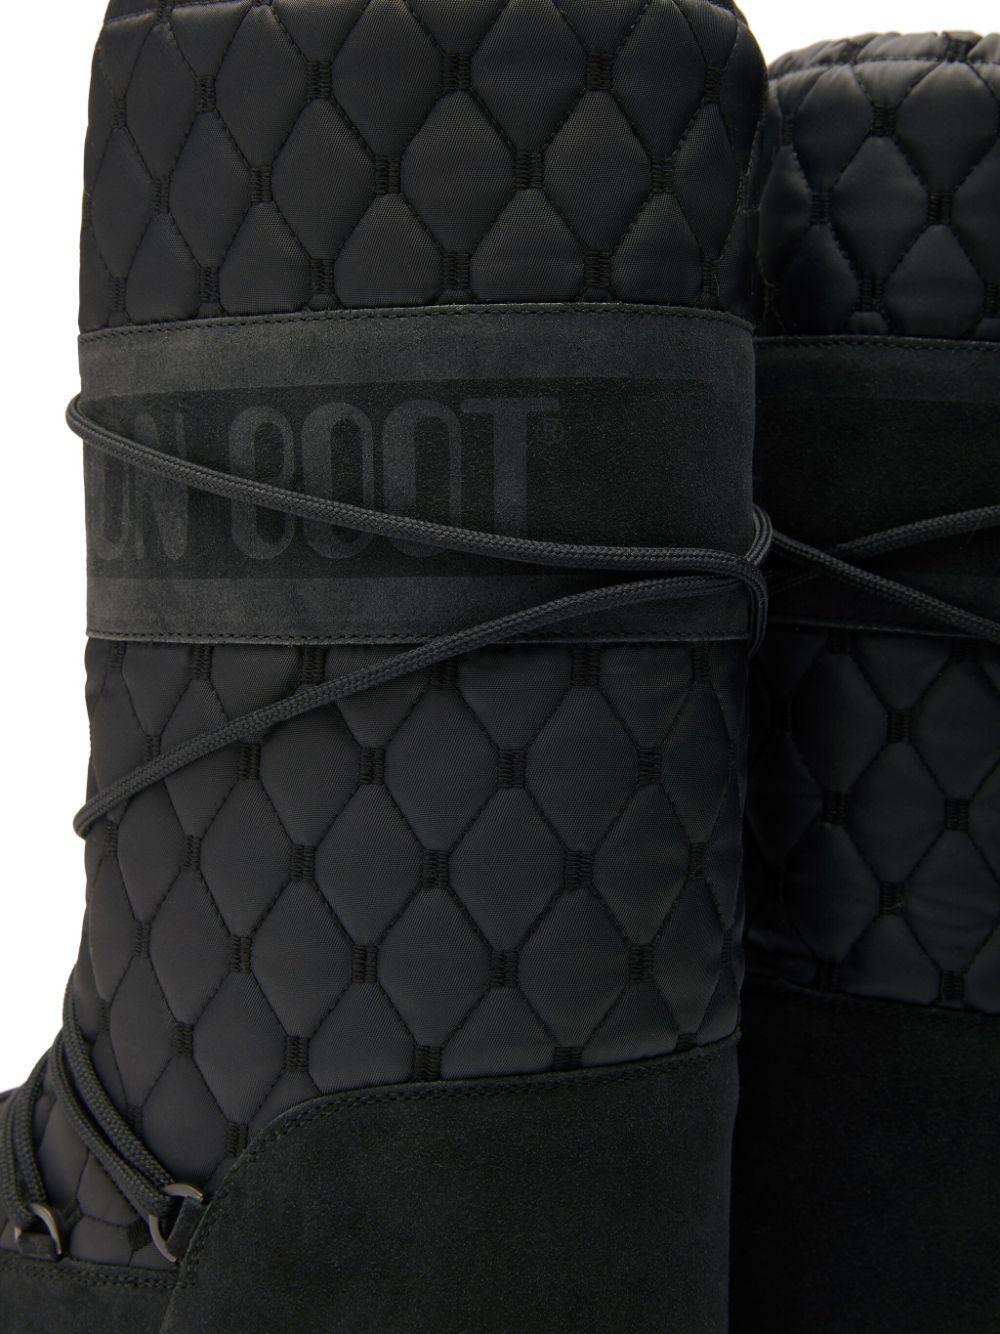 MOON BOOT UNISEX Icon Quilted Boots Black - MAISONDEFASHION.COM